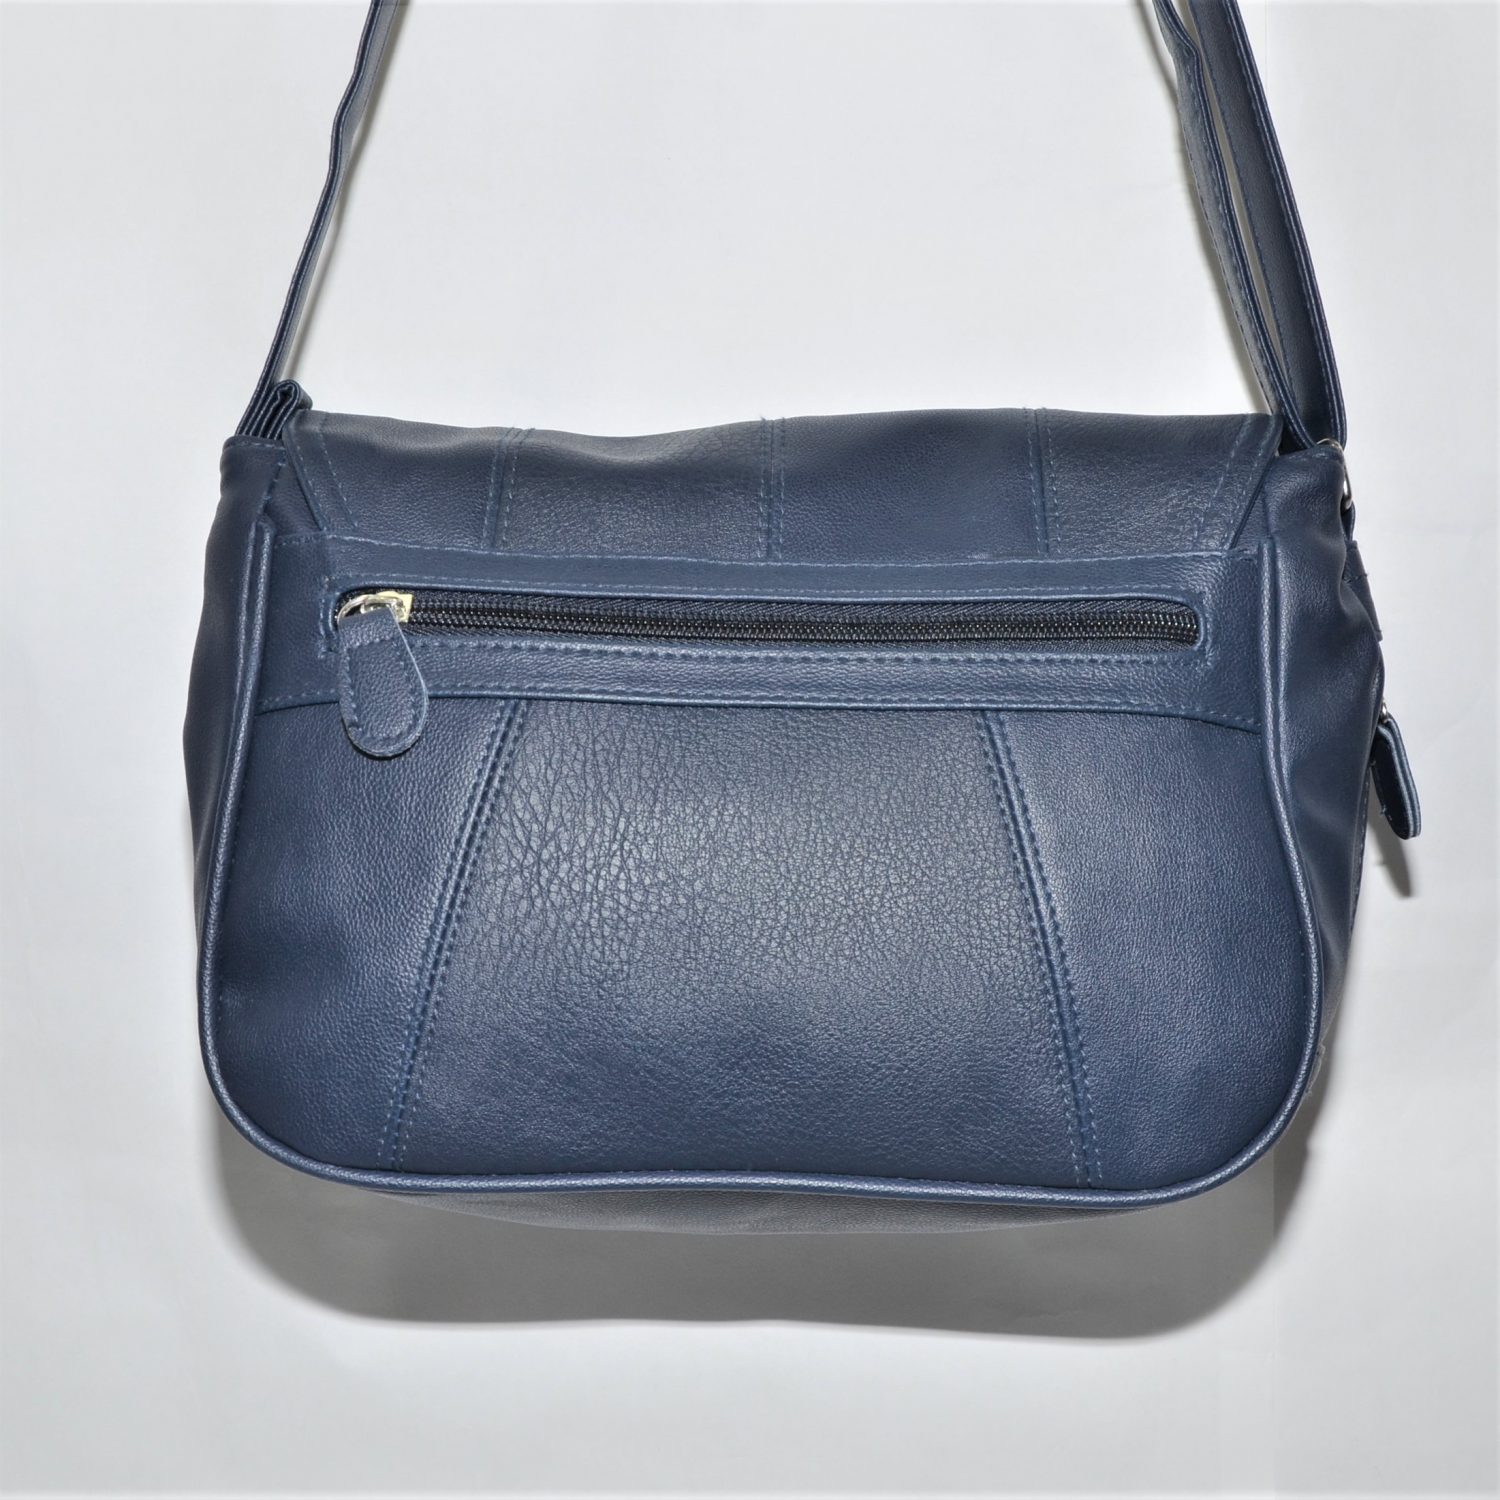 Nicole Brown Handbag - Style No. JBHB2548 - OJP Products